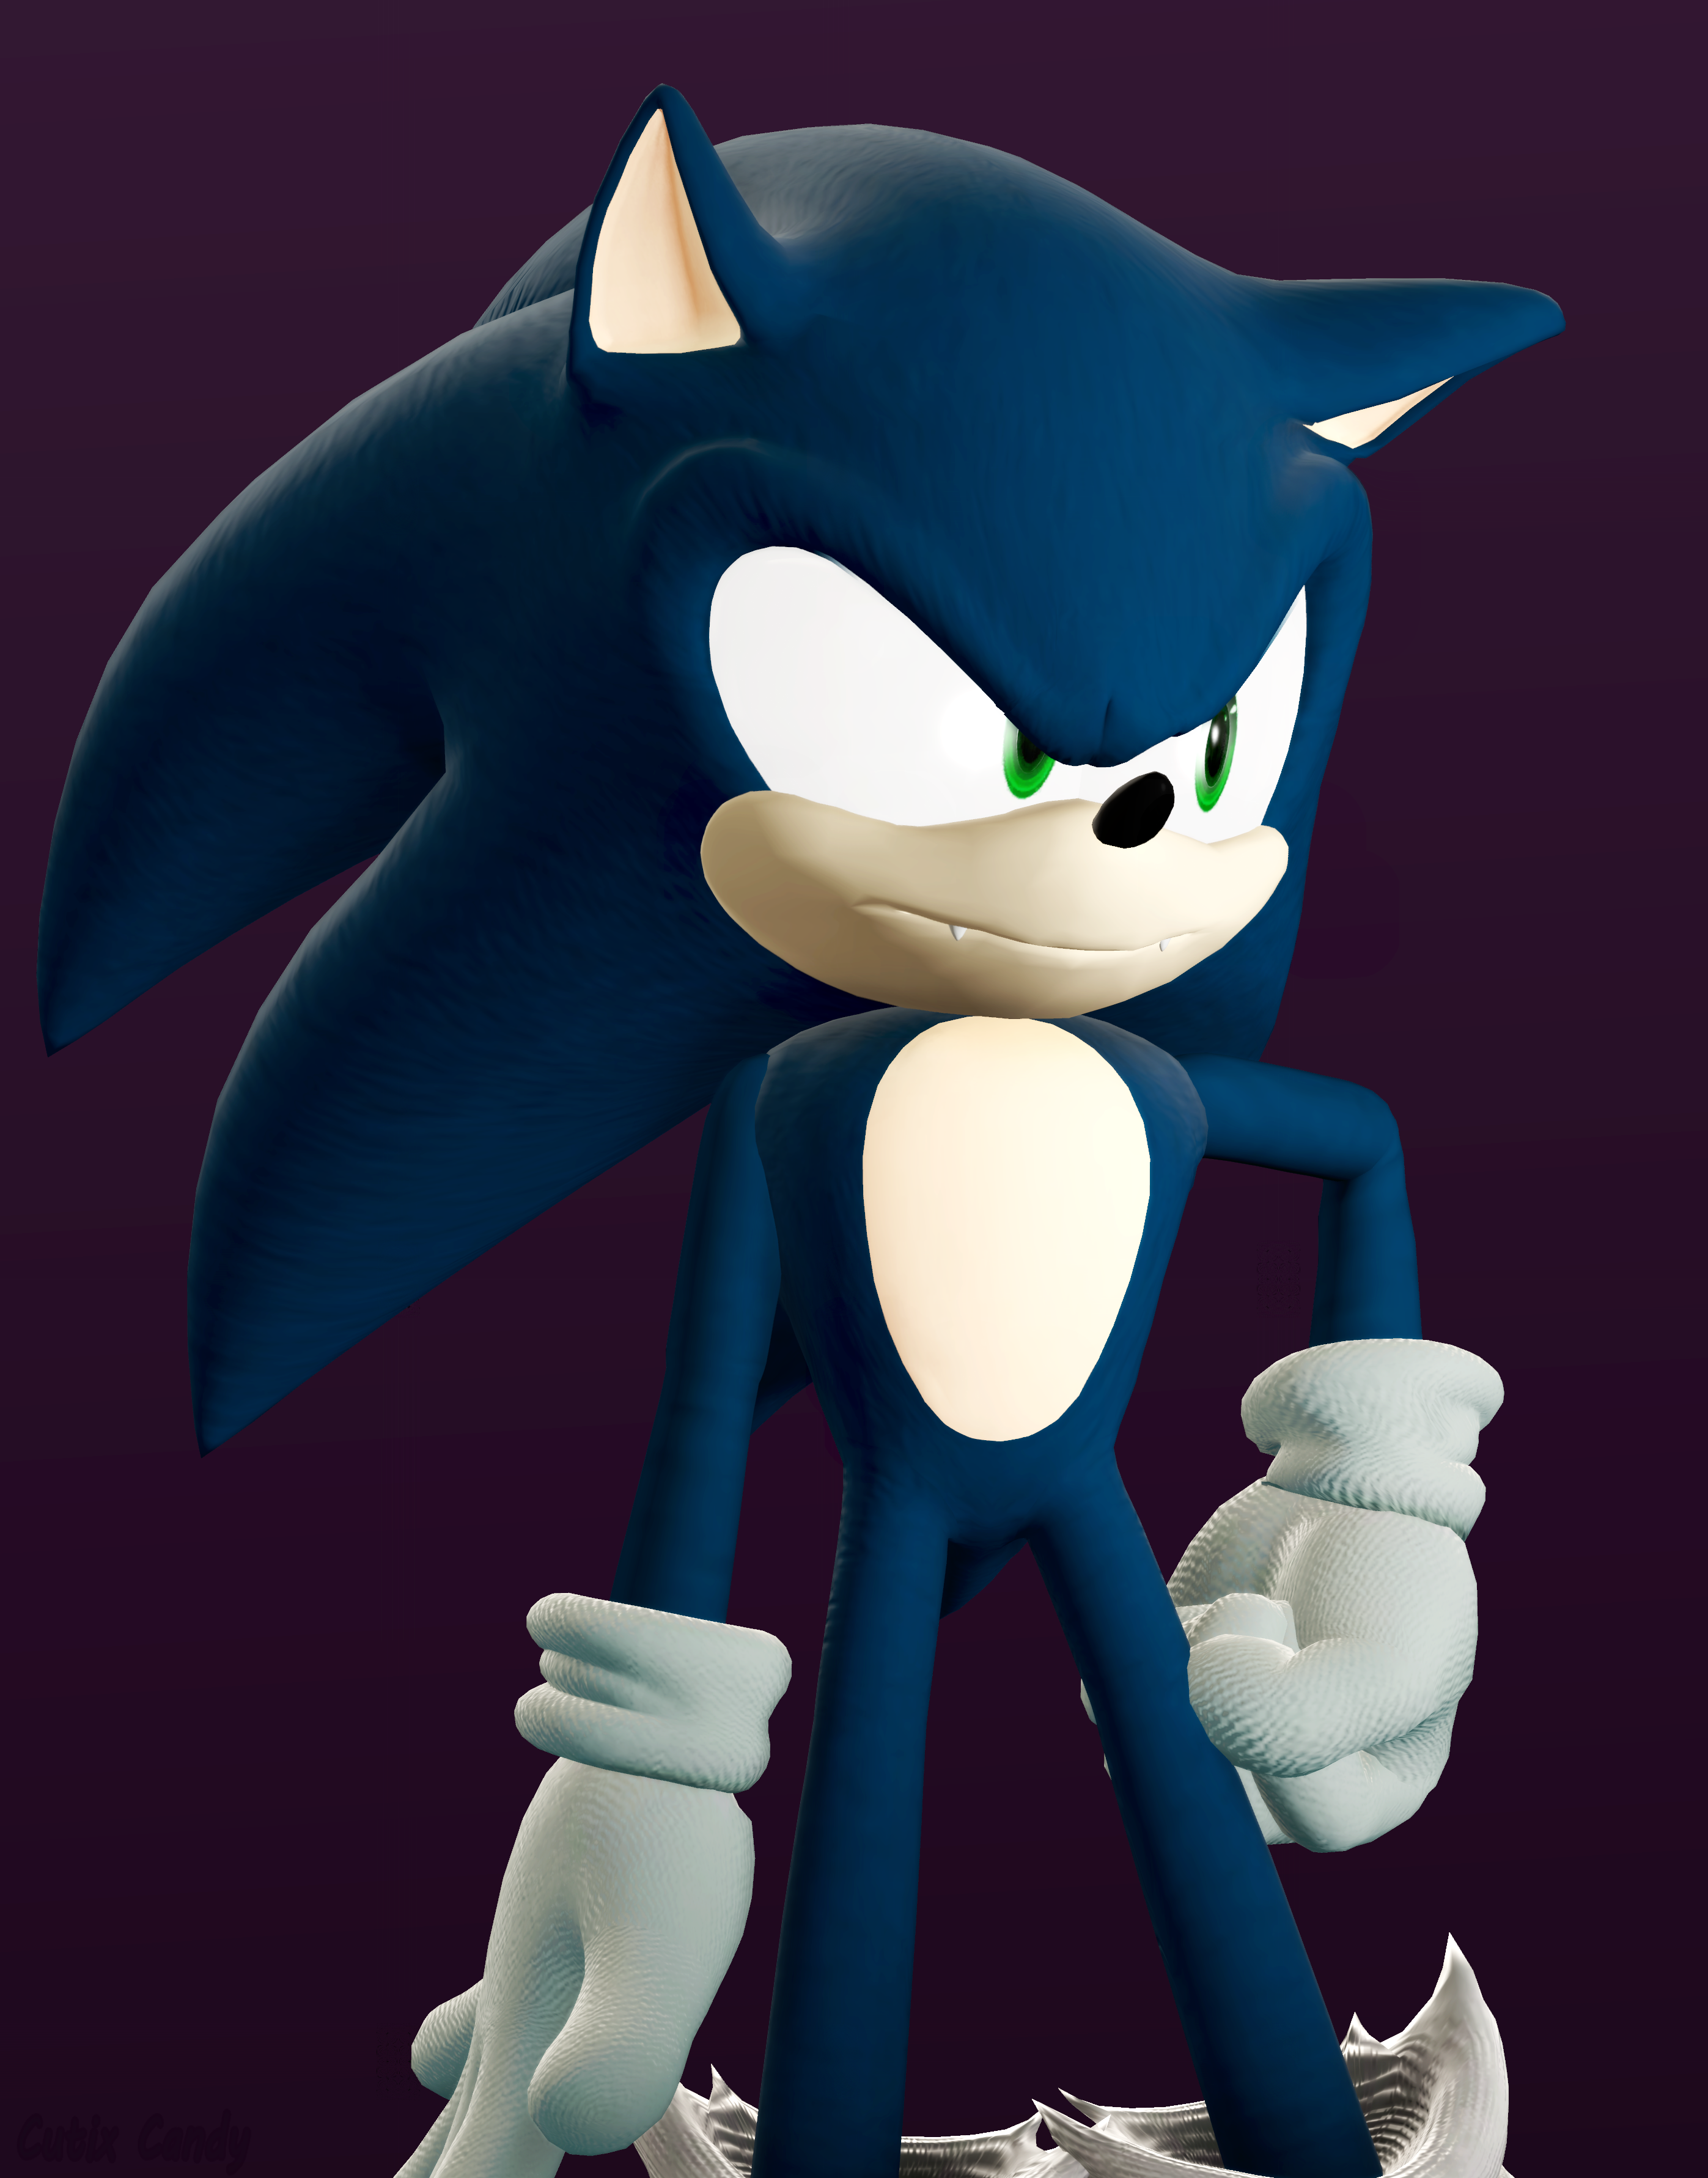 SFM/Sonic] Sonic Boom: A New Homeland by AngryGermanKidoble on DeviantArt